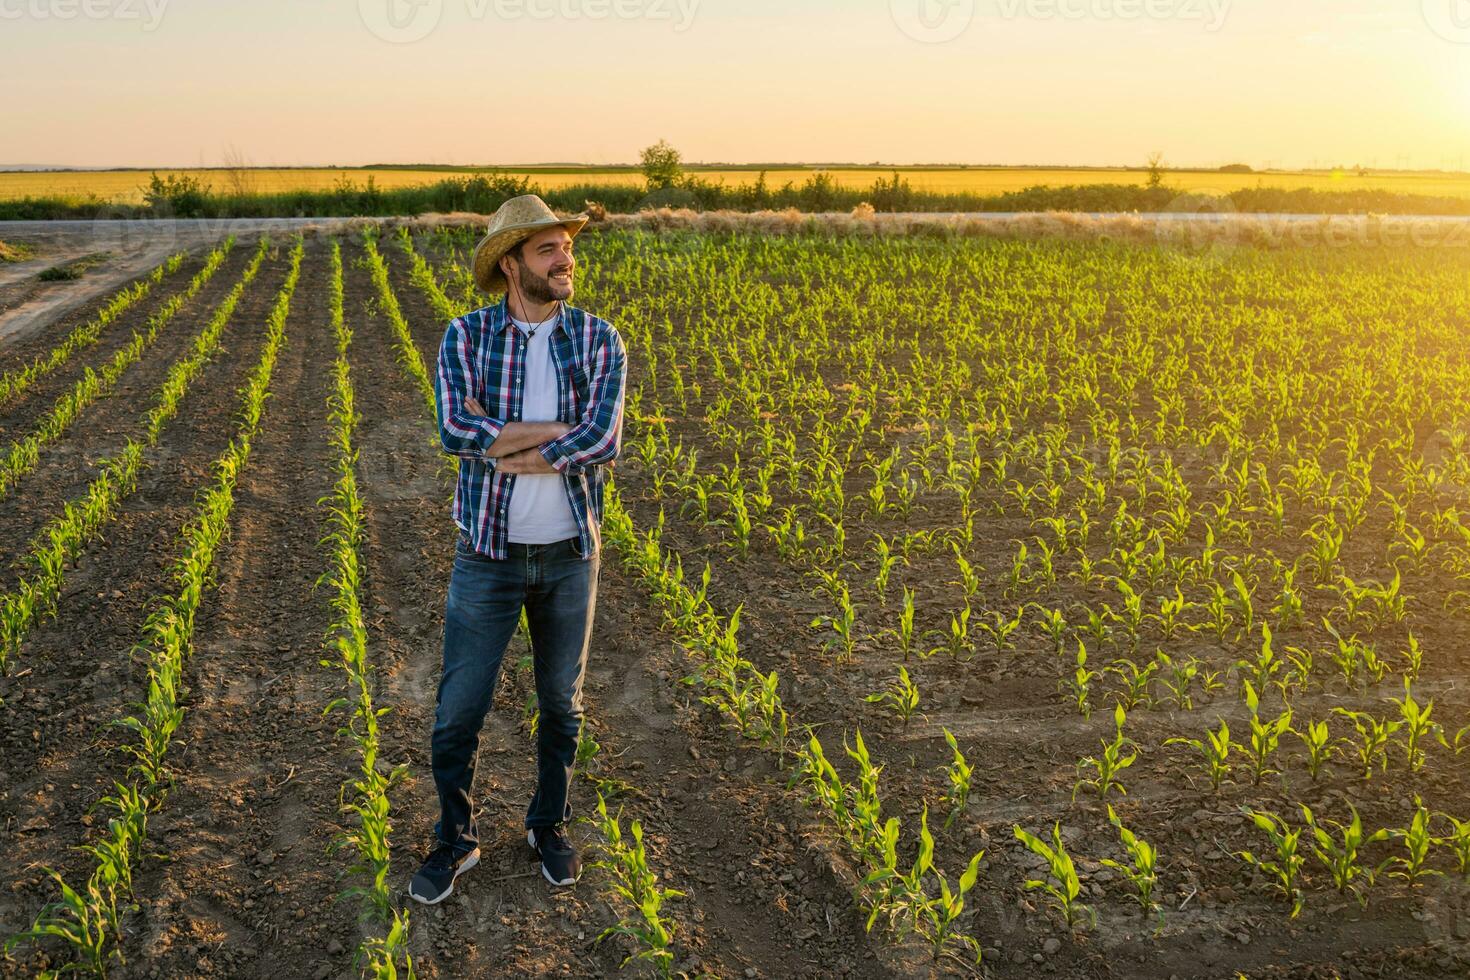 boer staand in een maïs veld- foto